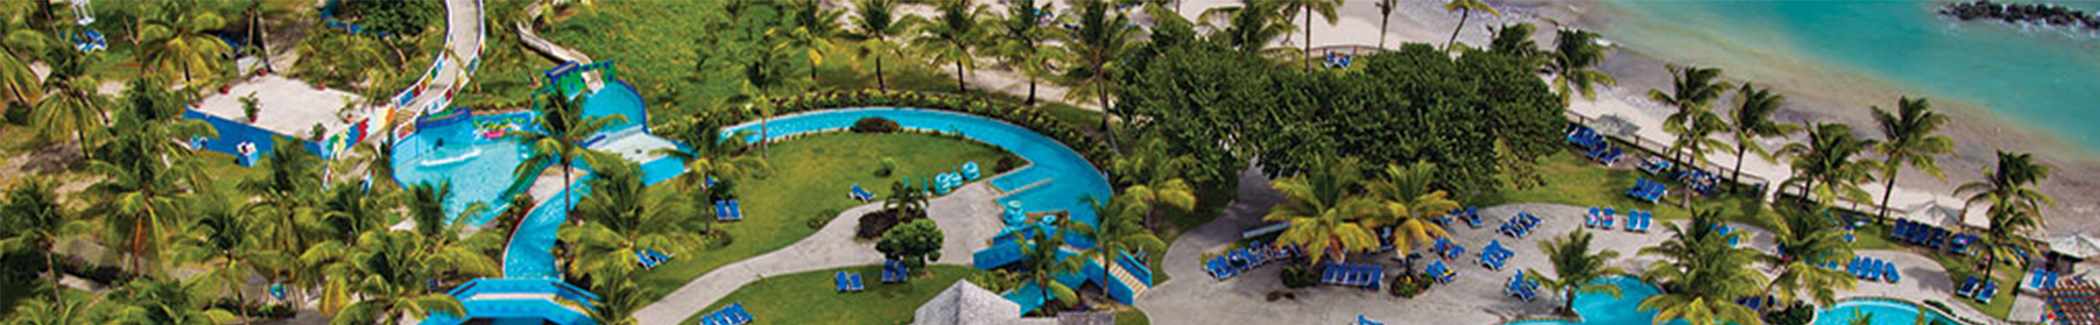 Coconut Bay Resort Saint Lucia Banner